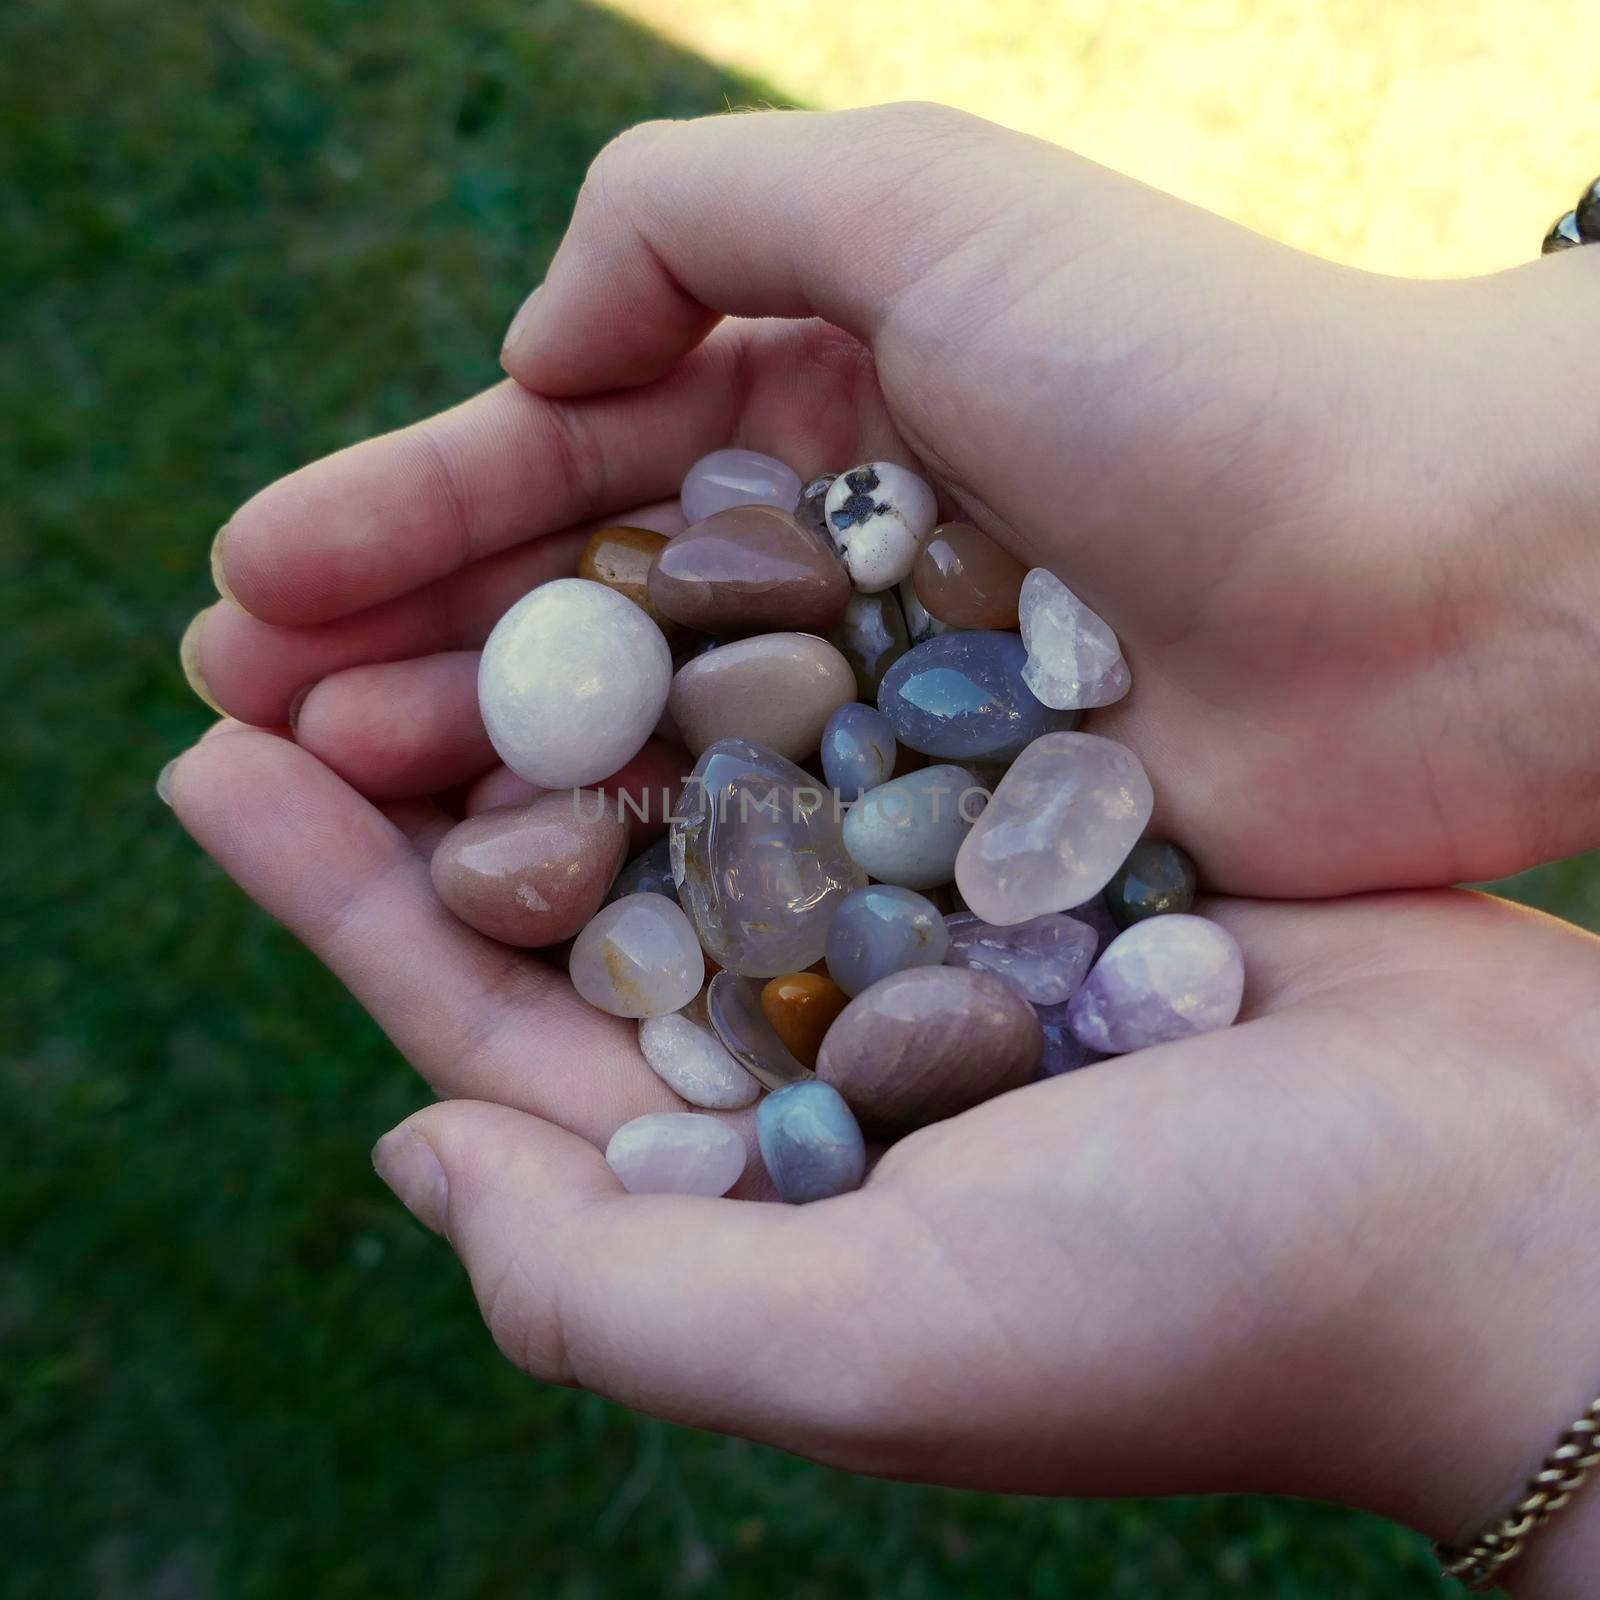 Hands full with healing stones by WielandTeixeira